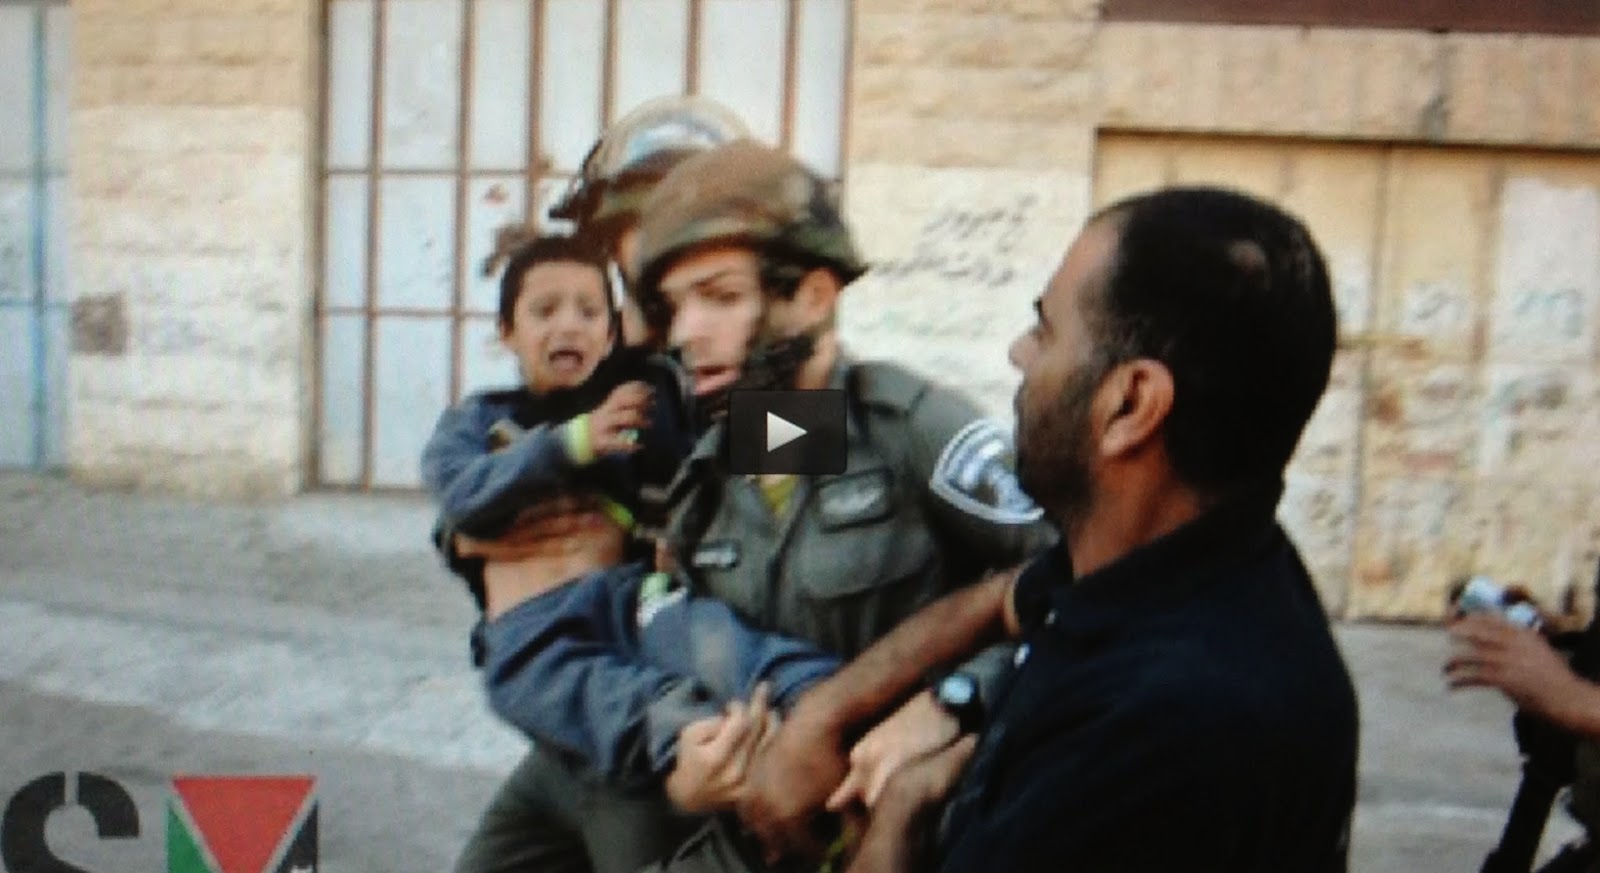 http://www.presstv.com/detail/2014/09/09/378187/video-israelis-arrest-7yearold-in-wb/